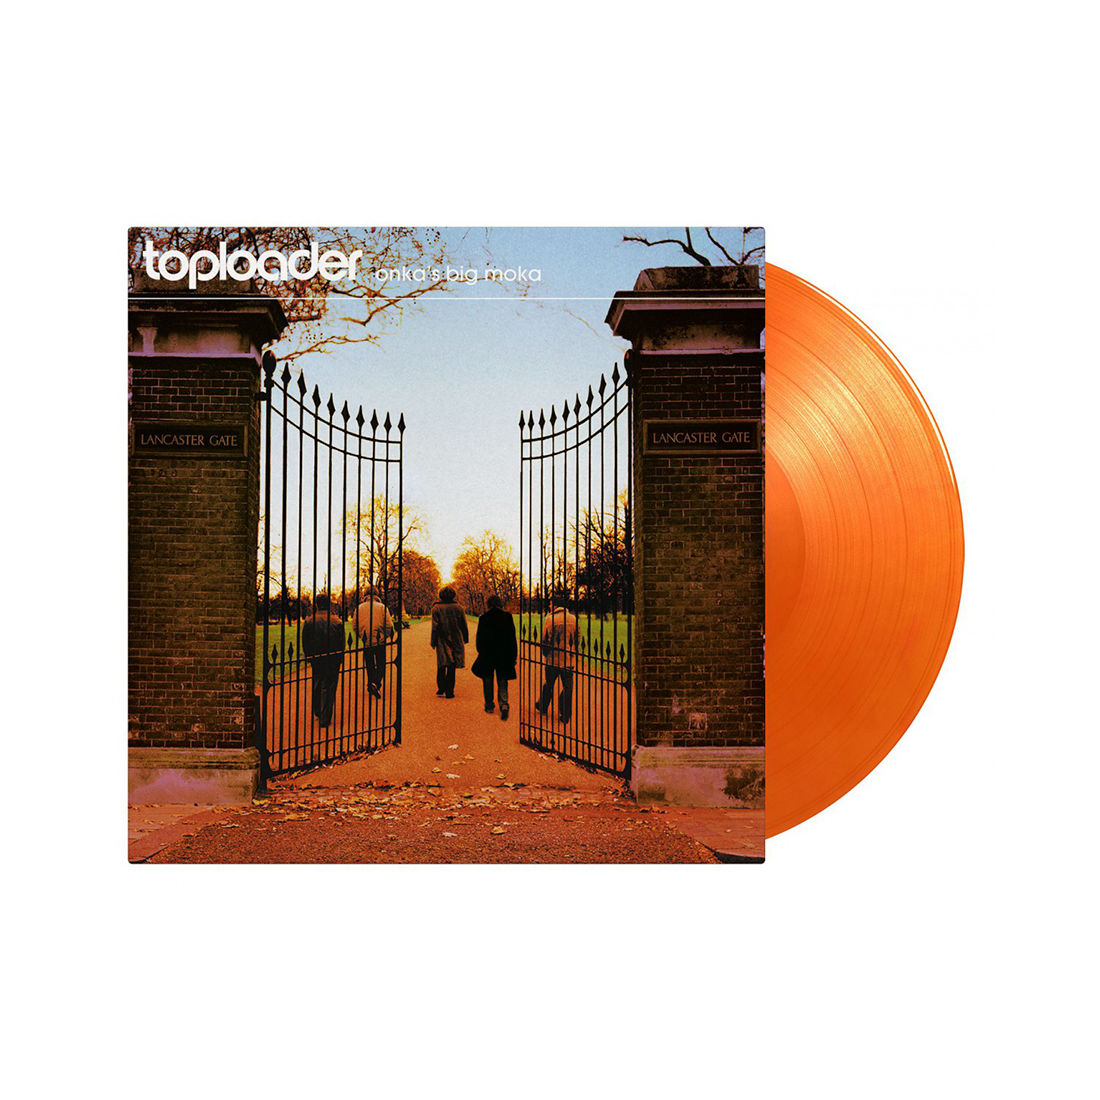 Toploader - Onka's Big Moka (Limited Edition Orange Swirled Vinyl)